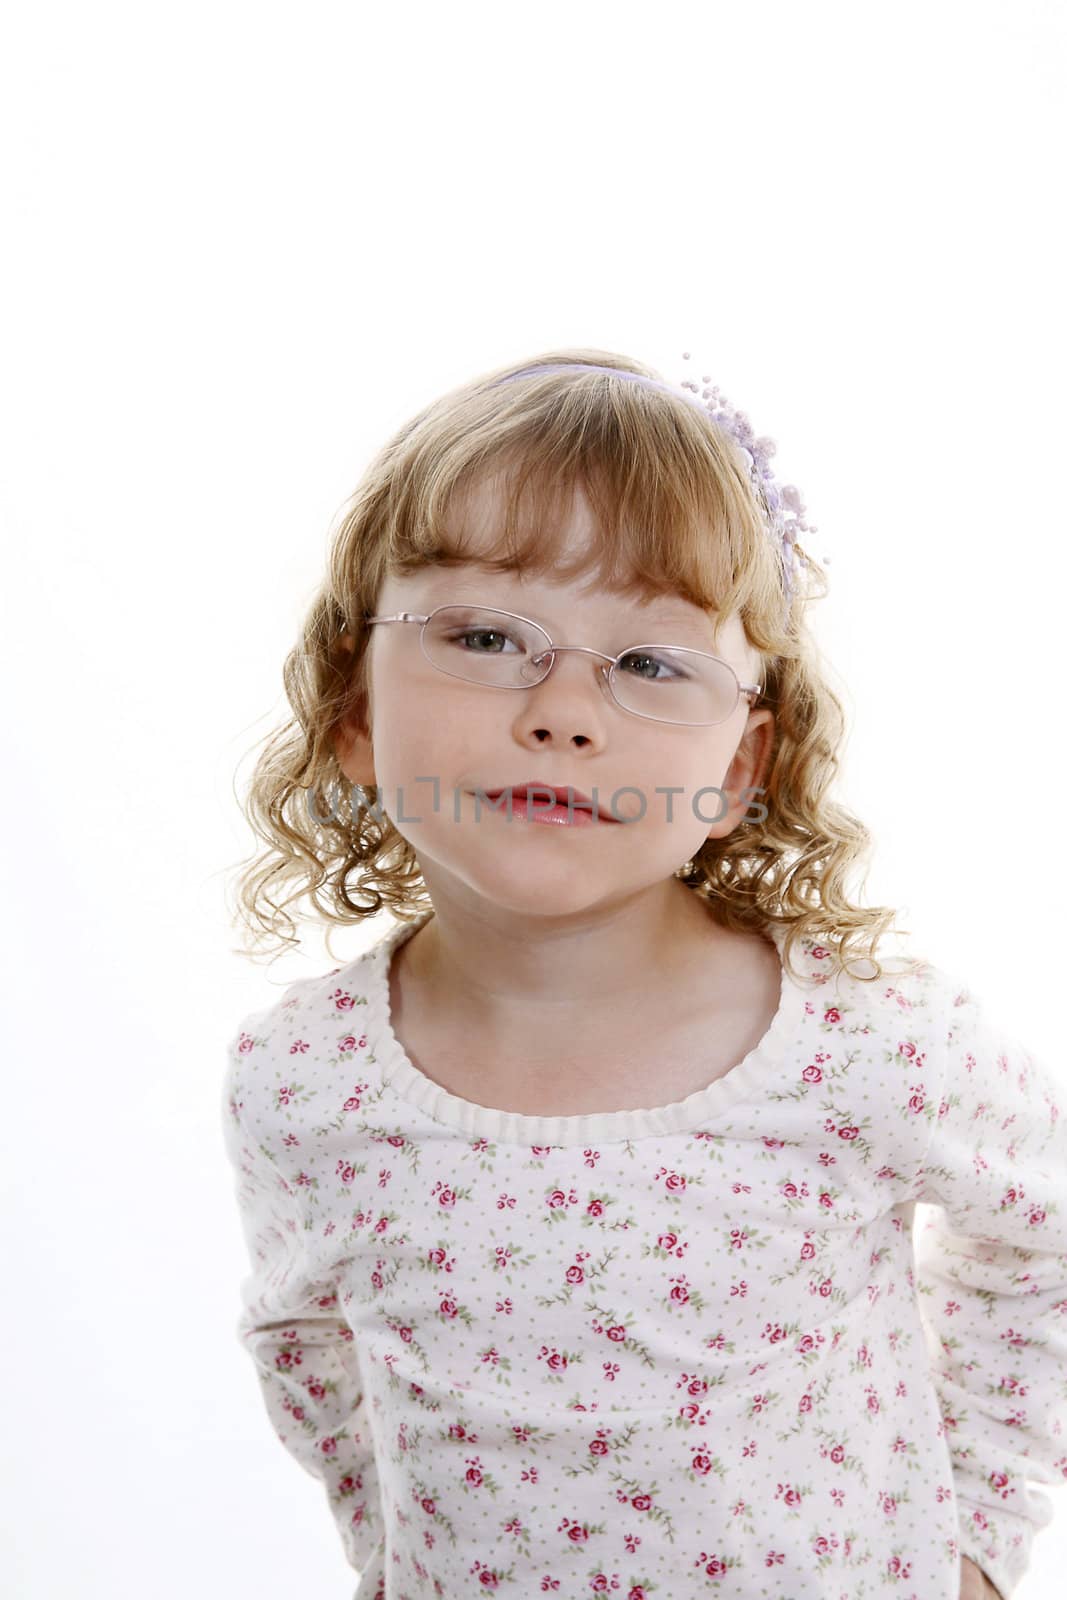 preteen girl wearing glasses